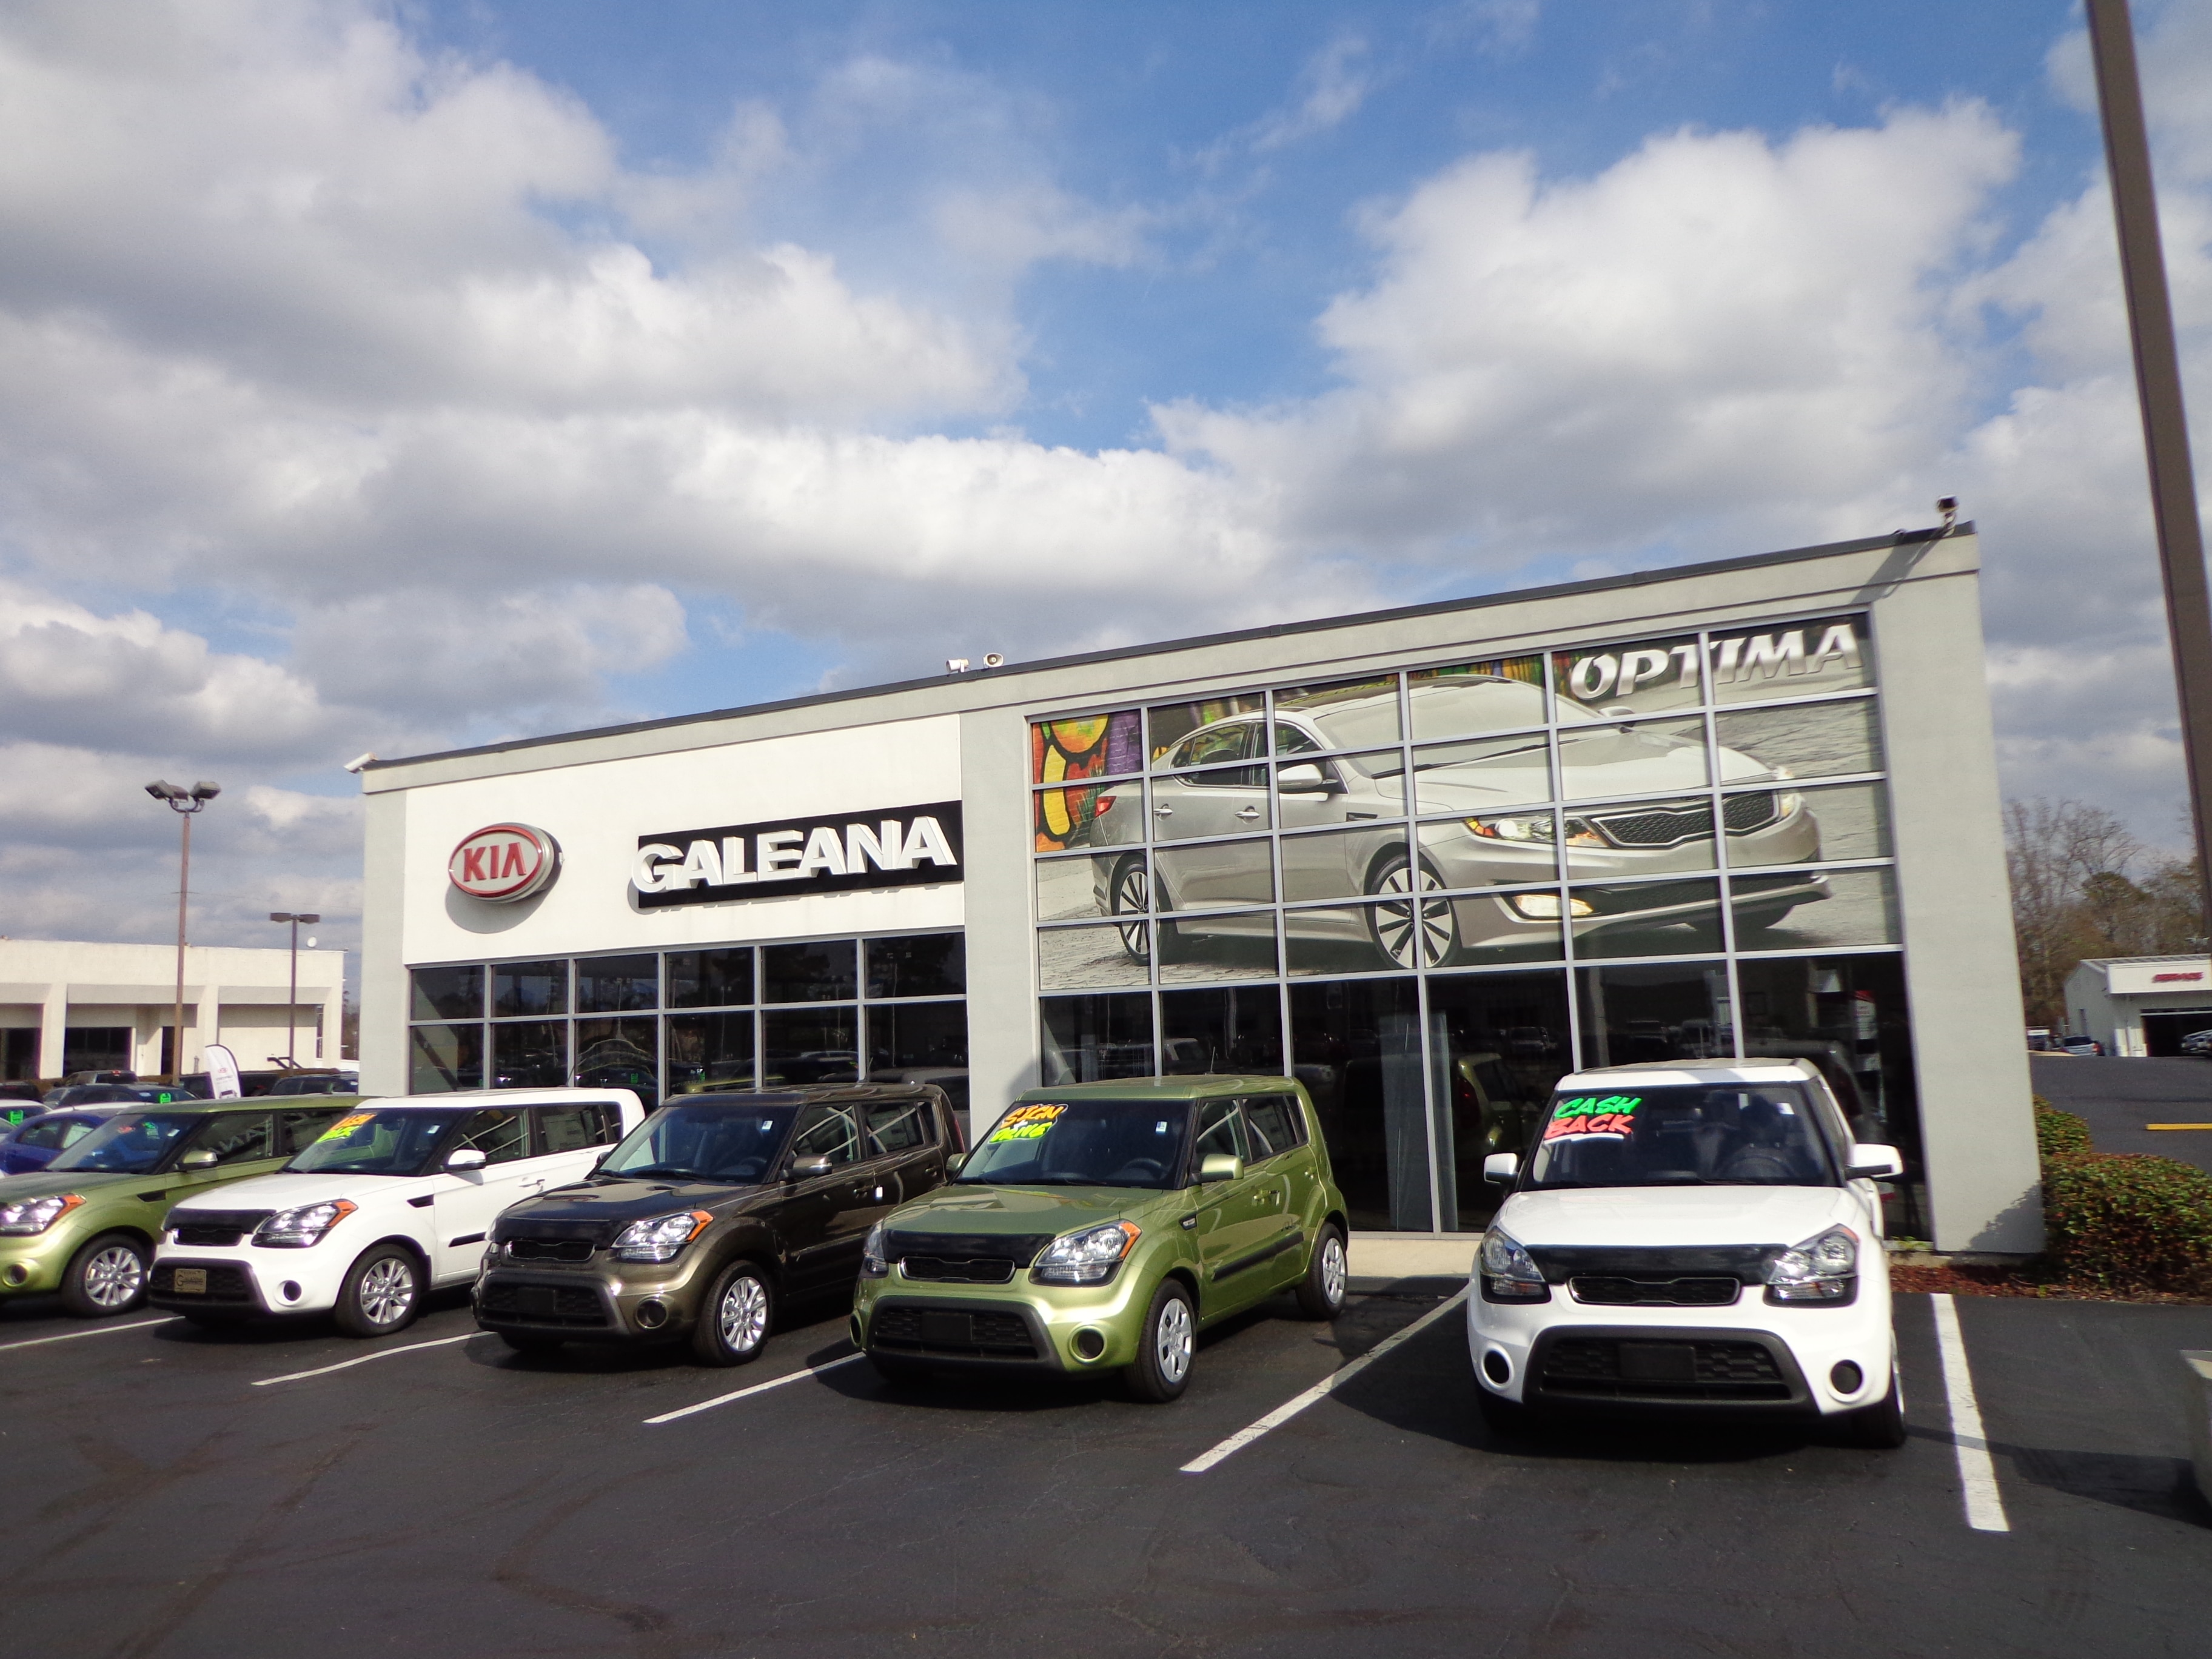 Kia Dealer in Columbia, SC | New Kia & Used Car Dealership | About